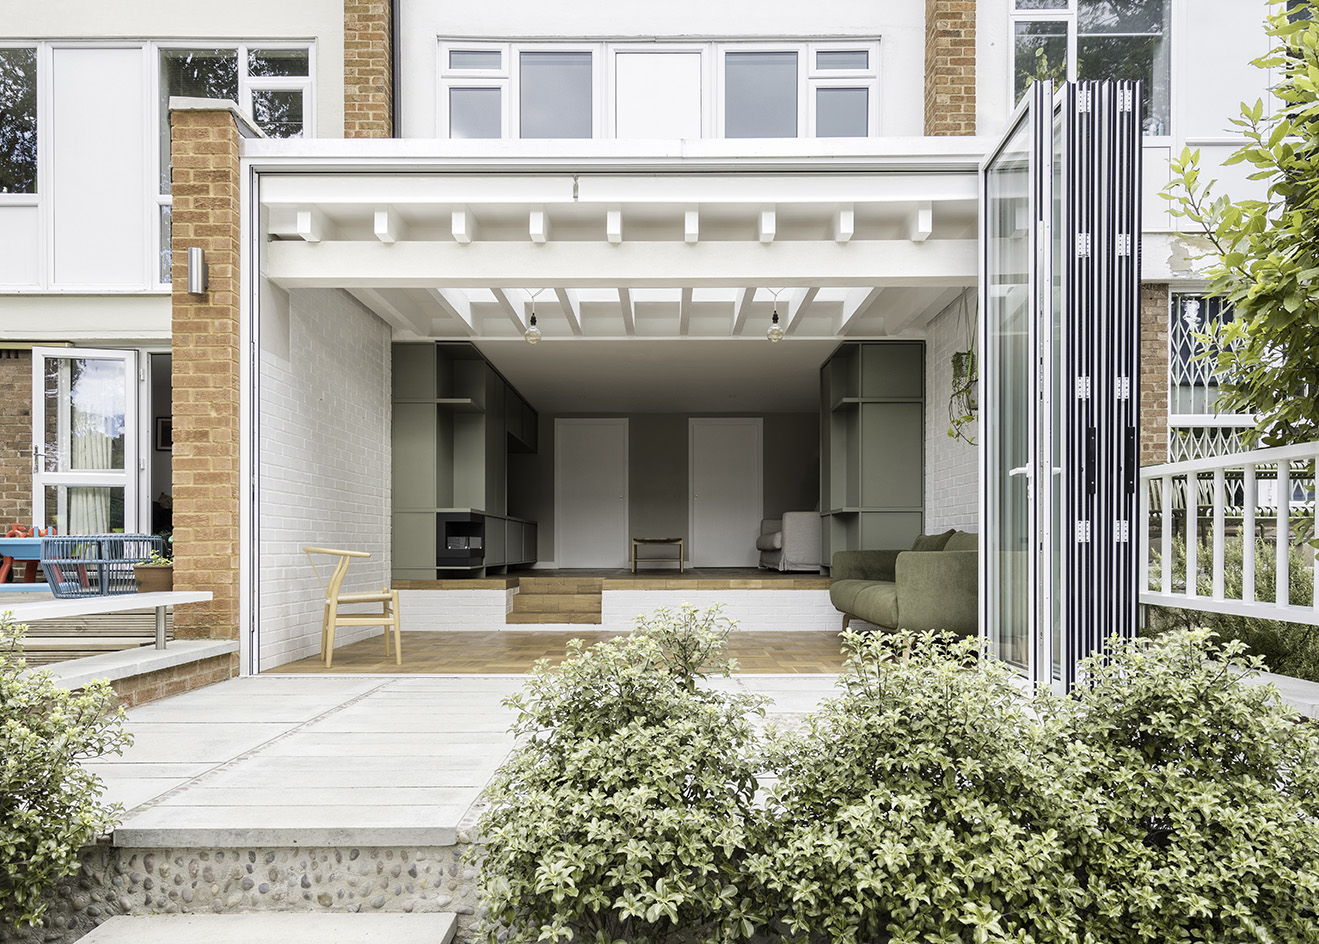 Minimalist architecture: homes that inspire calm